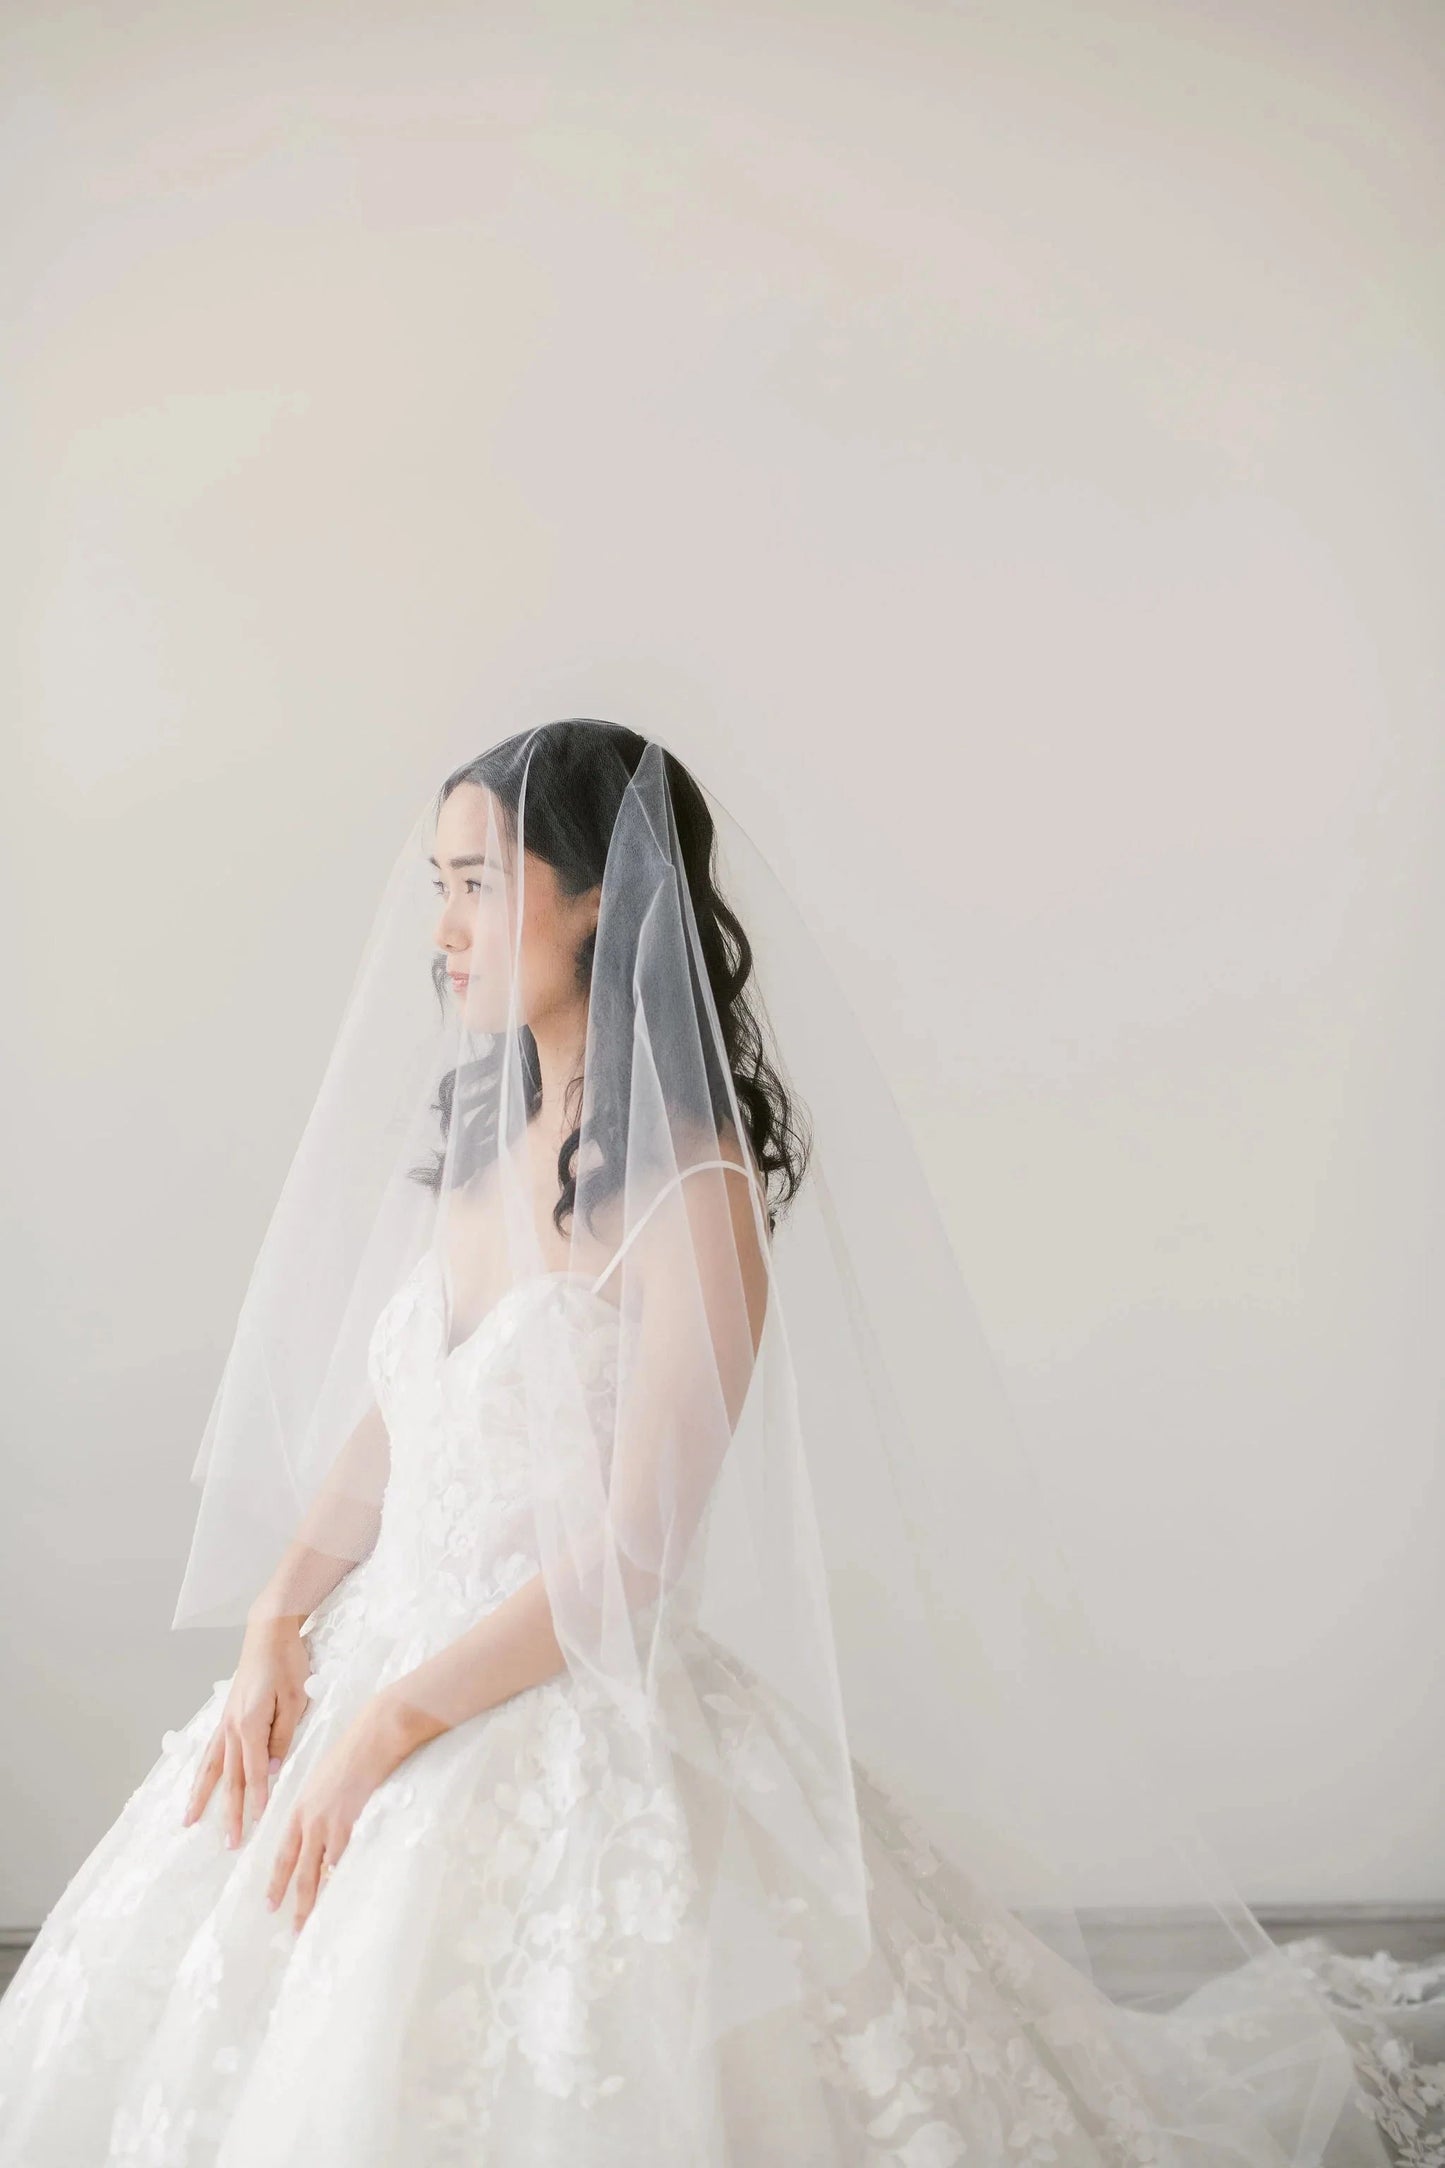 Tulle circle drop bridal veil | Blusher veil | Ready to ship